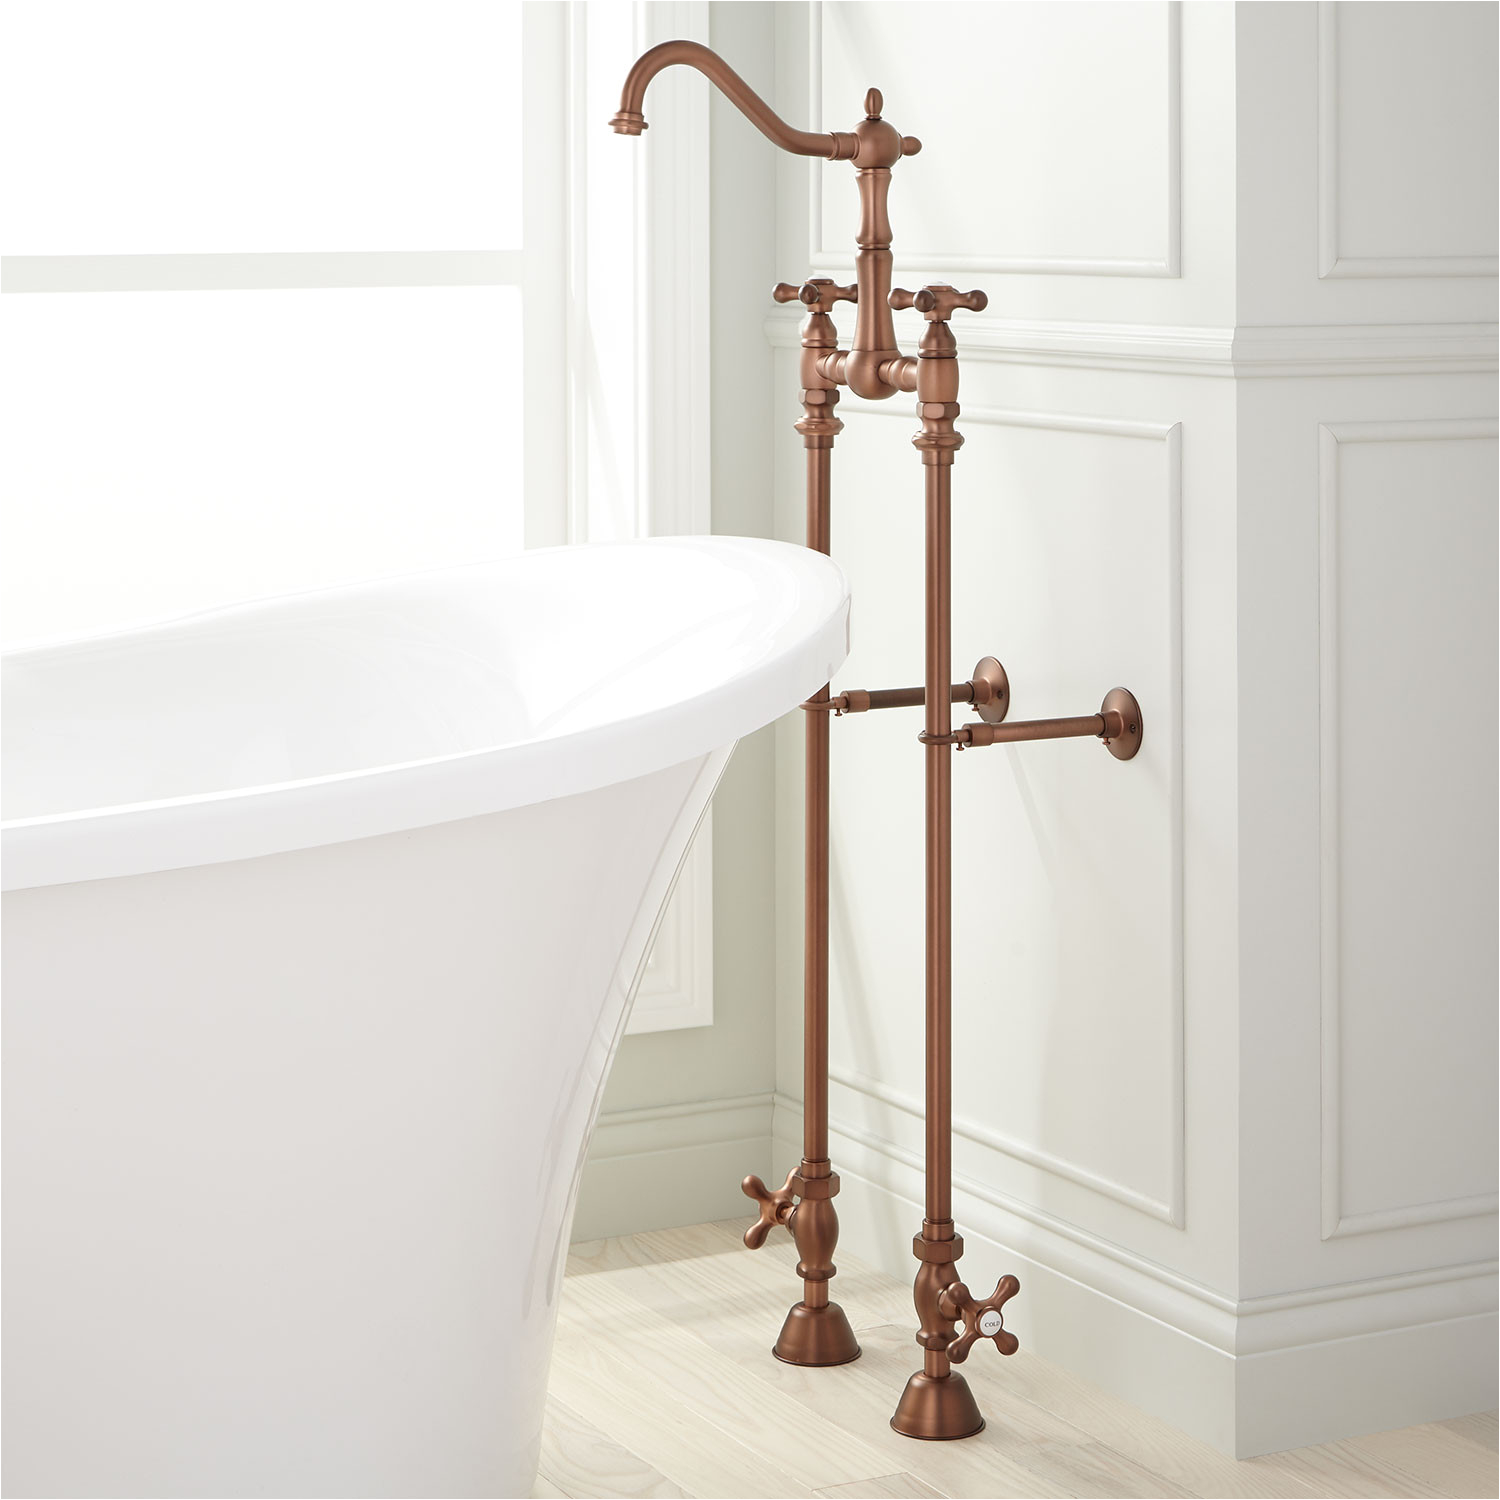 Types Of Bathtub Valves Victorian Freestanding Tub Faucet Supplies Valves